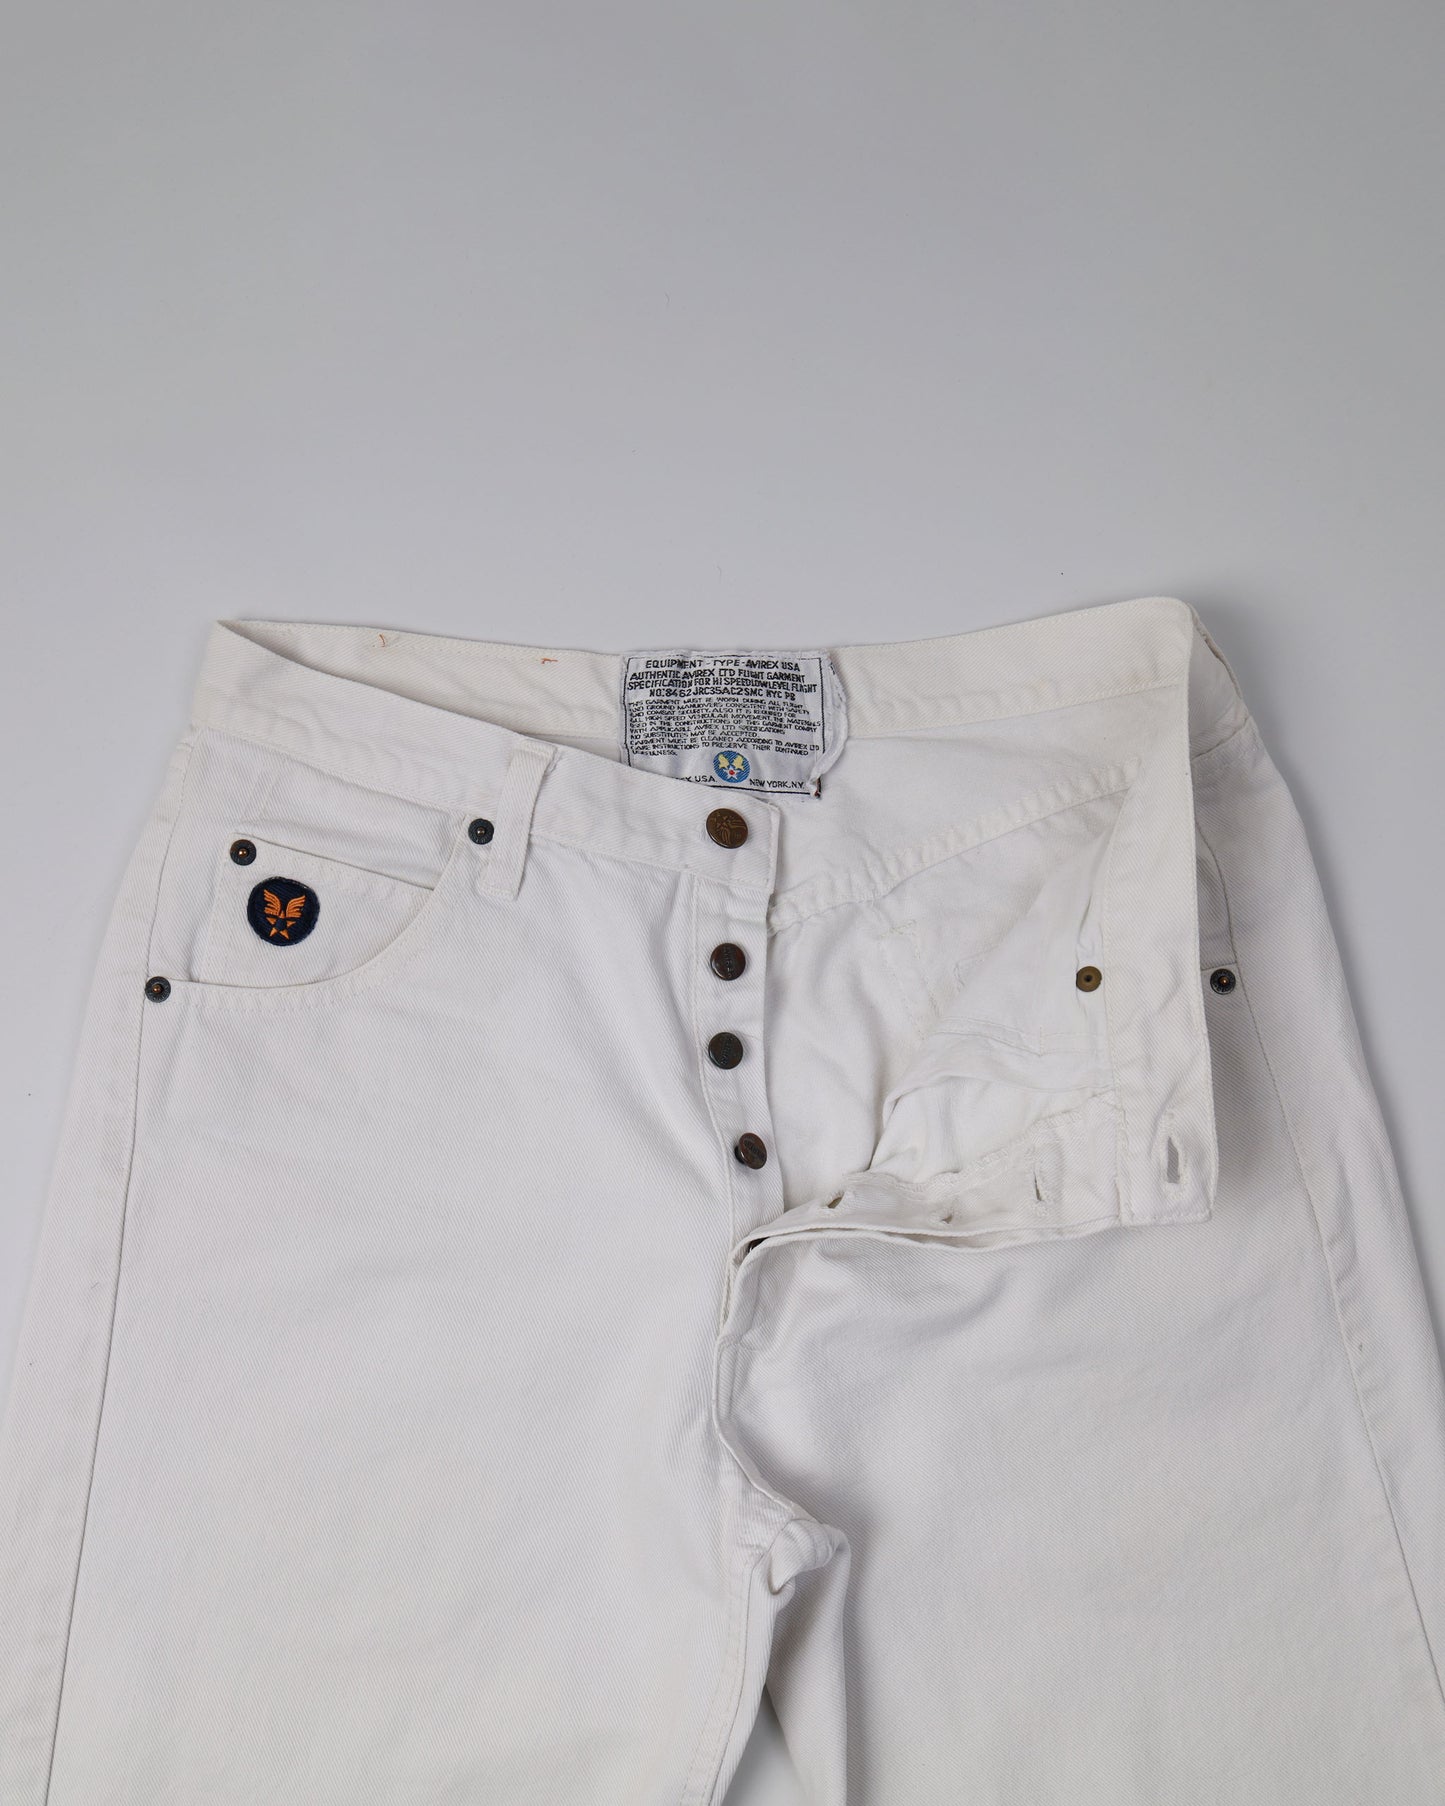 Avirex Denim Jeans White W30